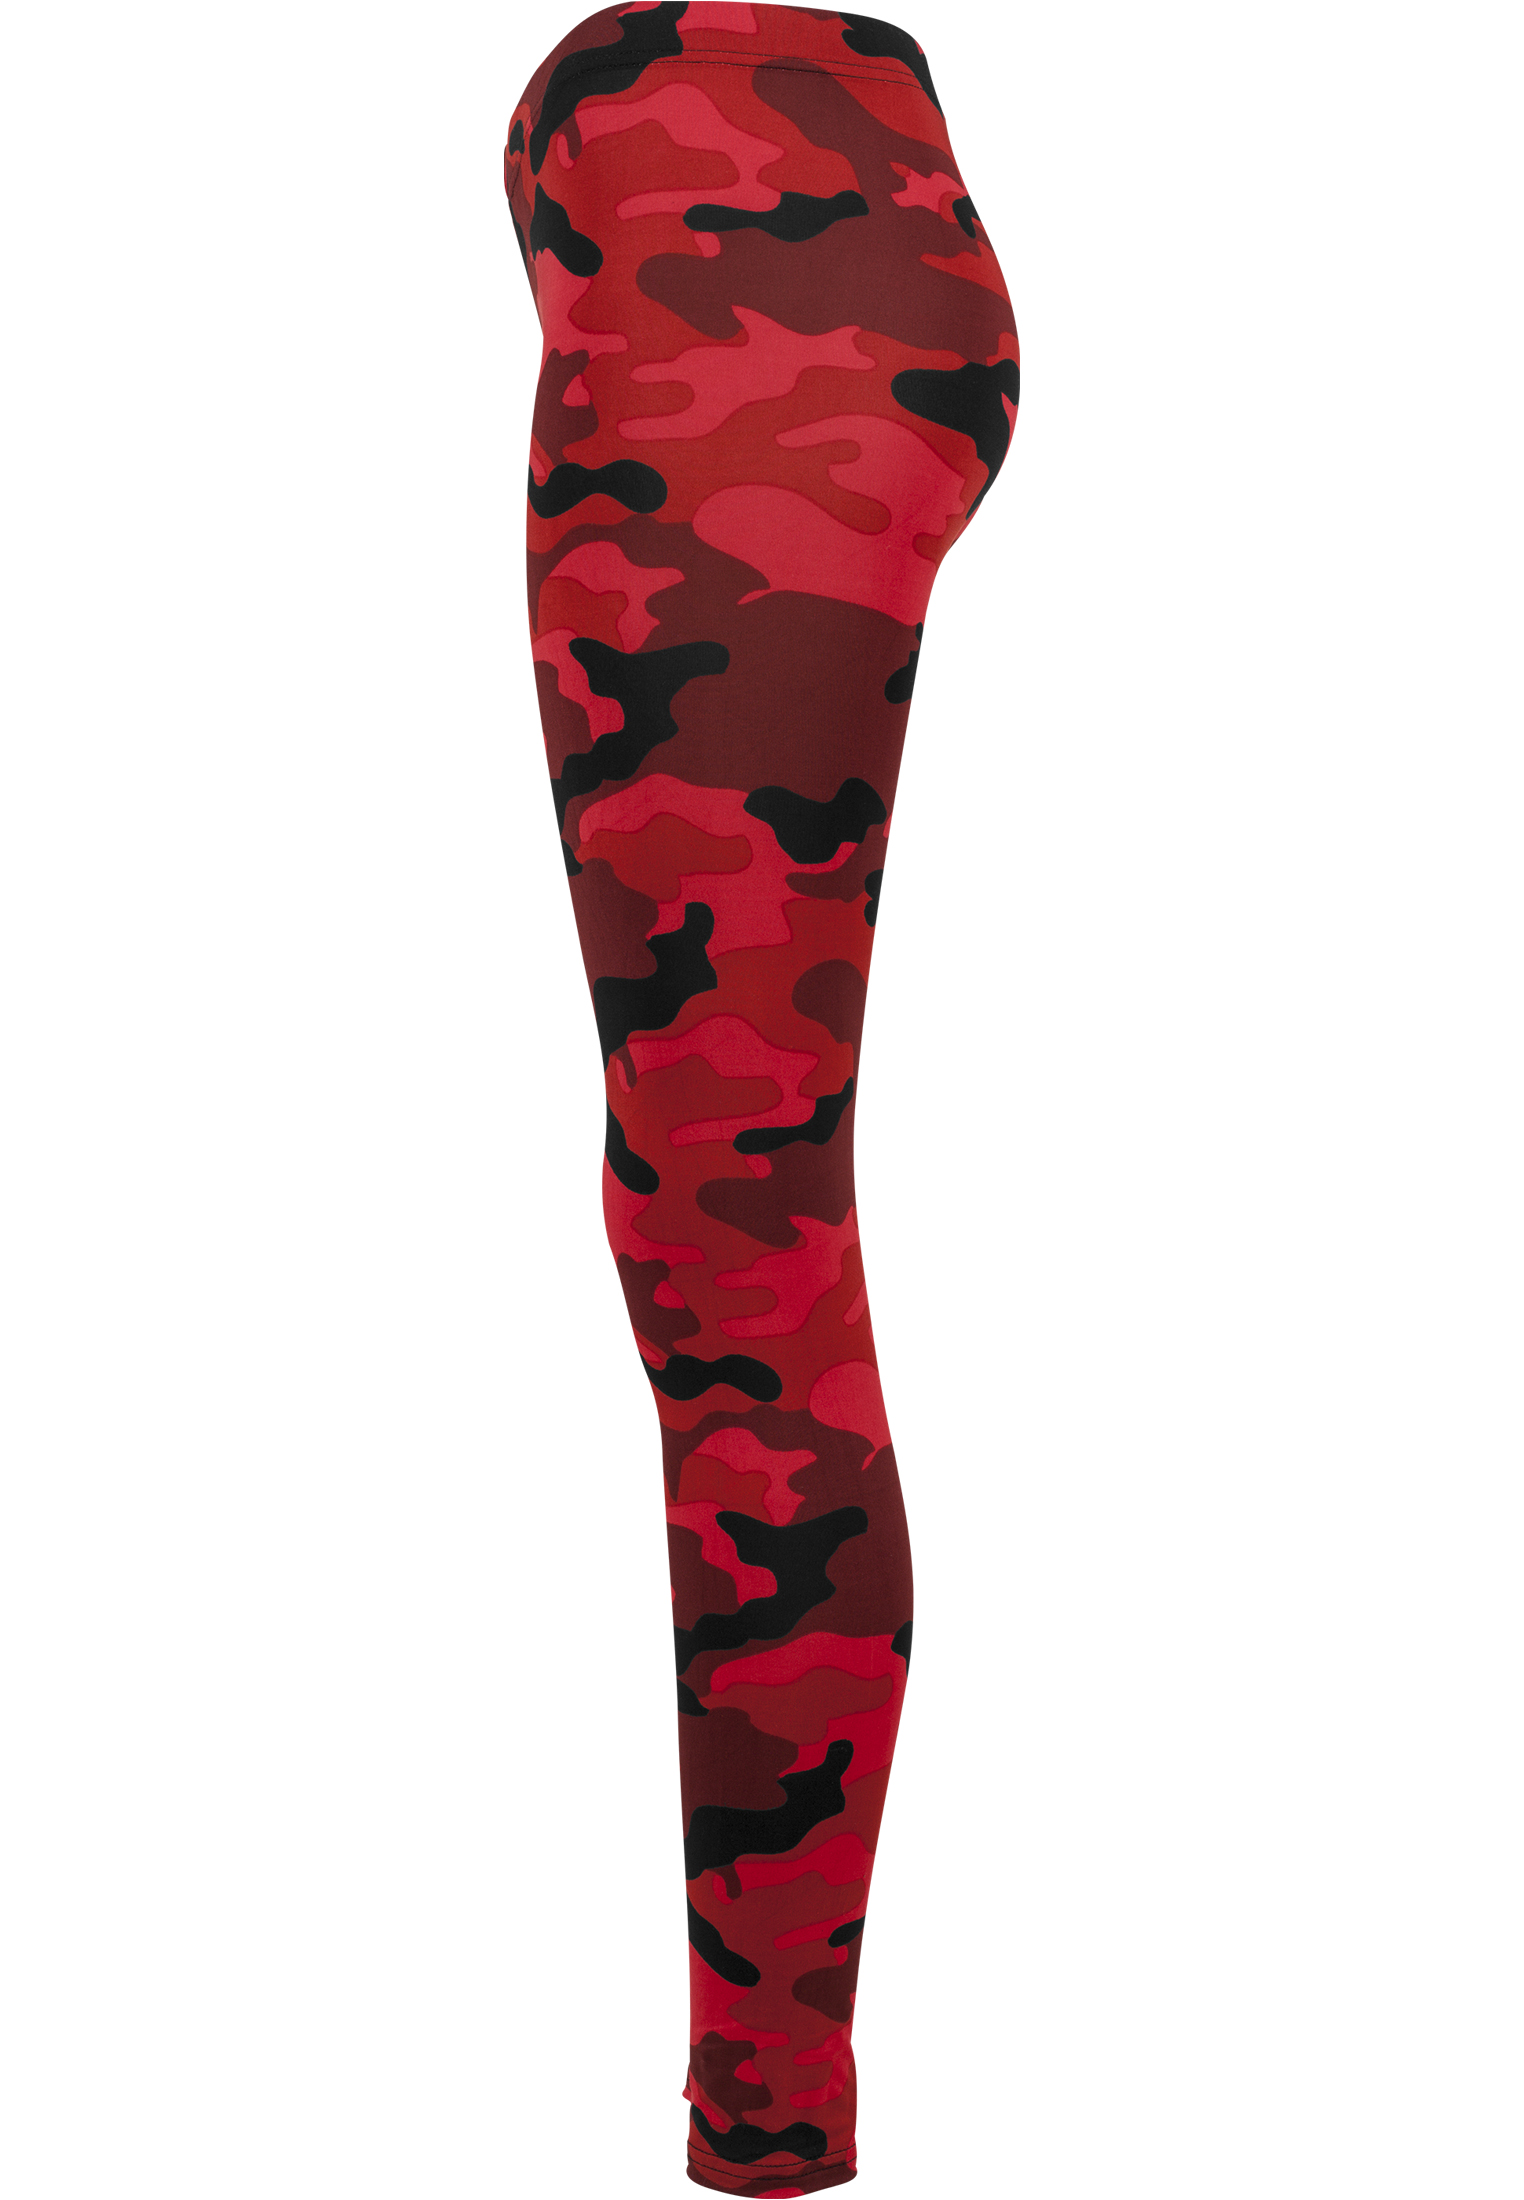 Curvy Ladies Camo Leggings in Farbe red camo